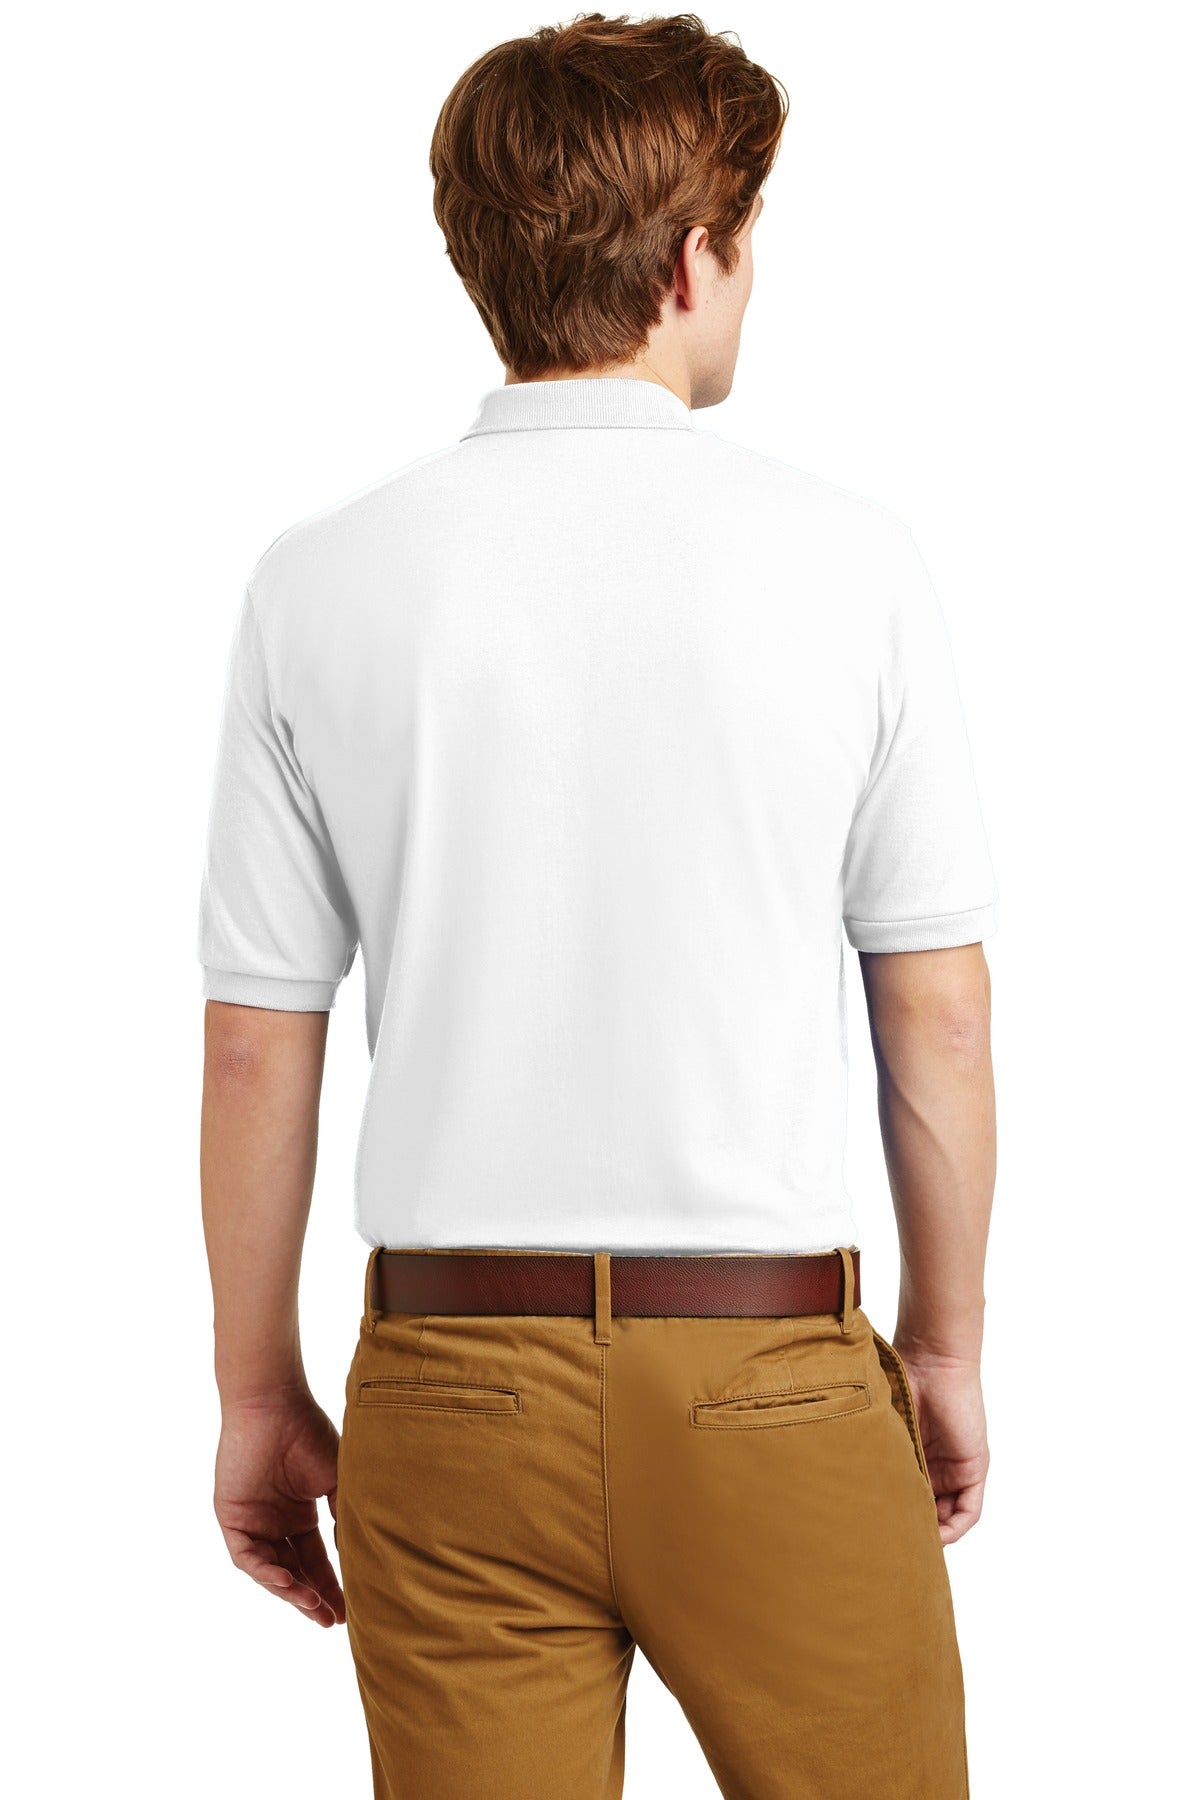 JERZEES® - SpotShield™ 5.4-Ounce Jersey Knit Sport Shirt. 437M [White] - DFW Impression